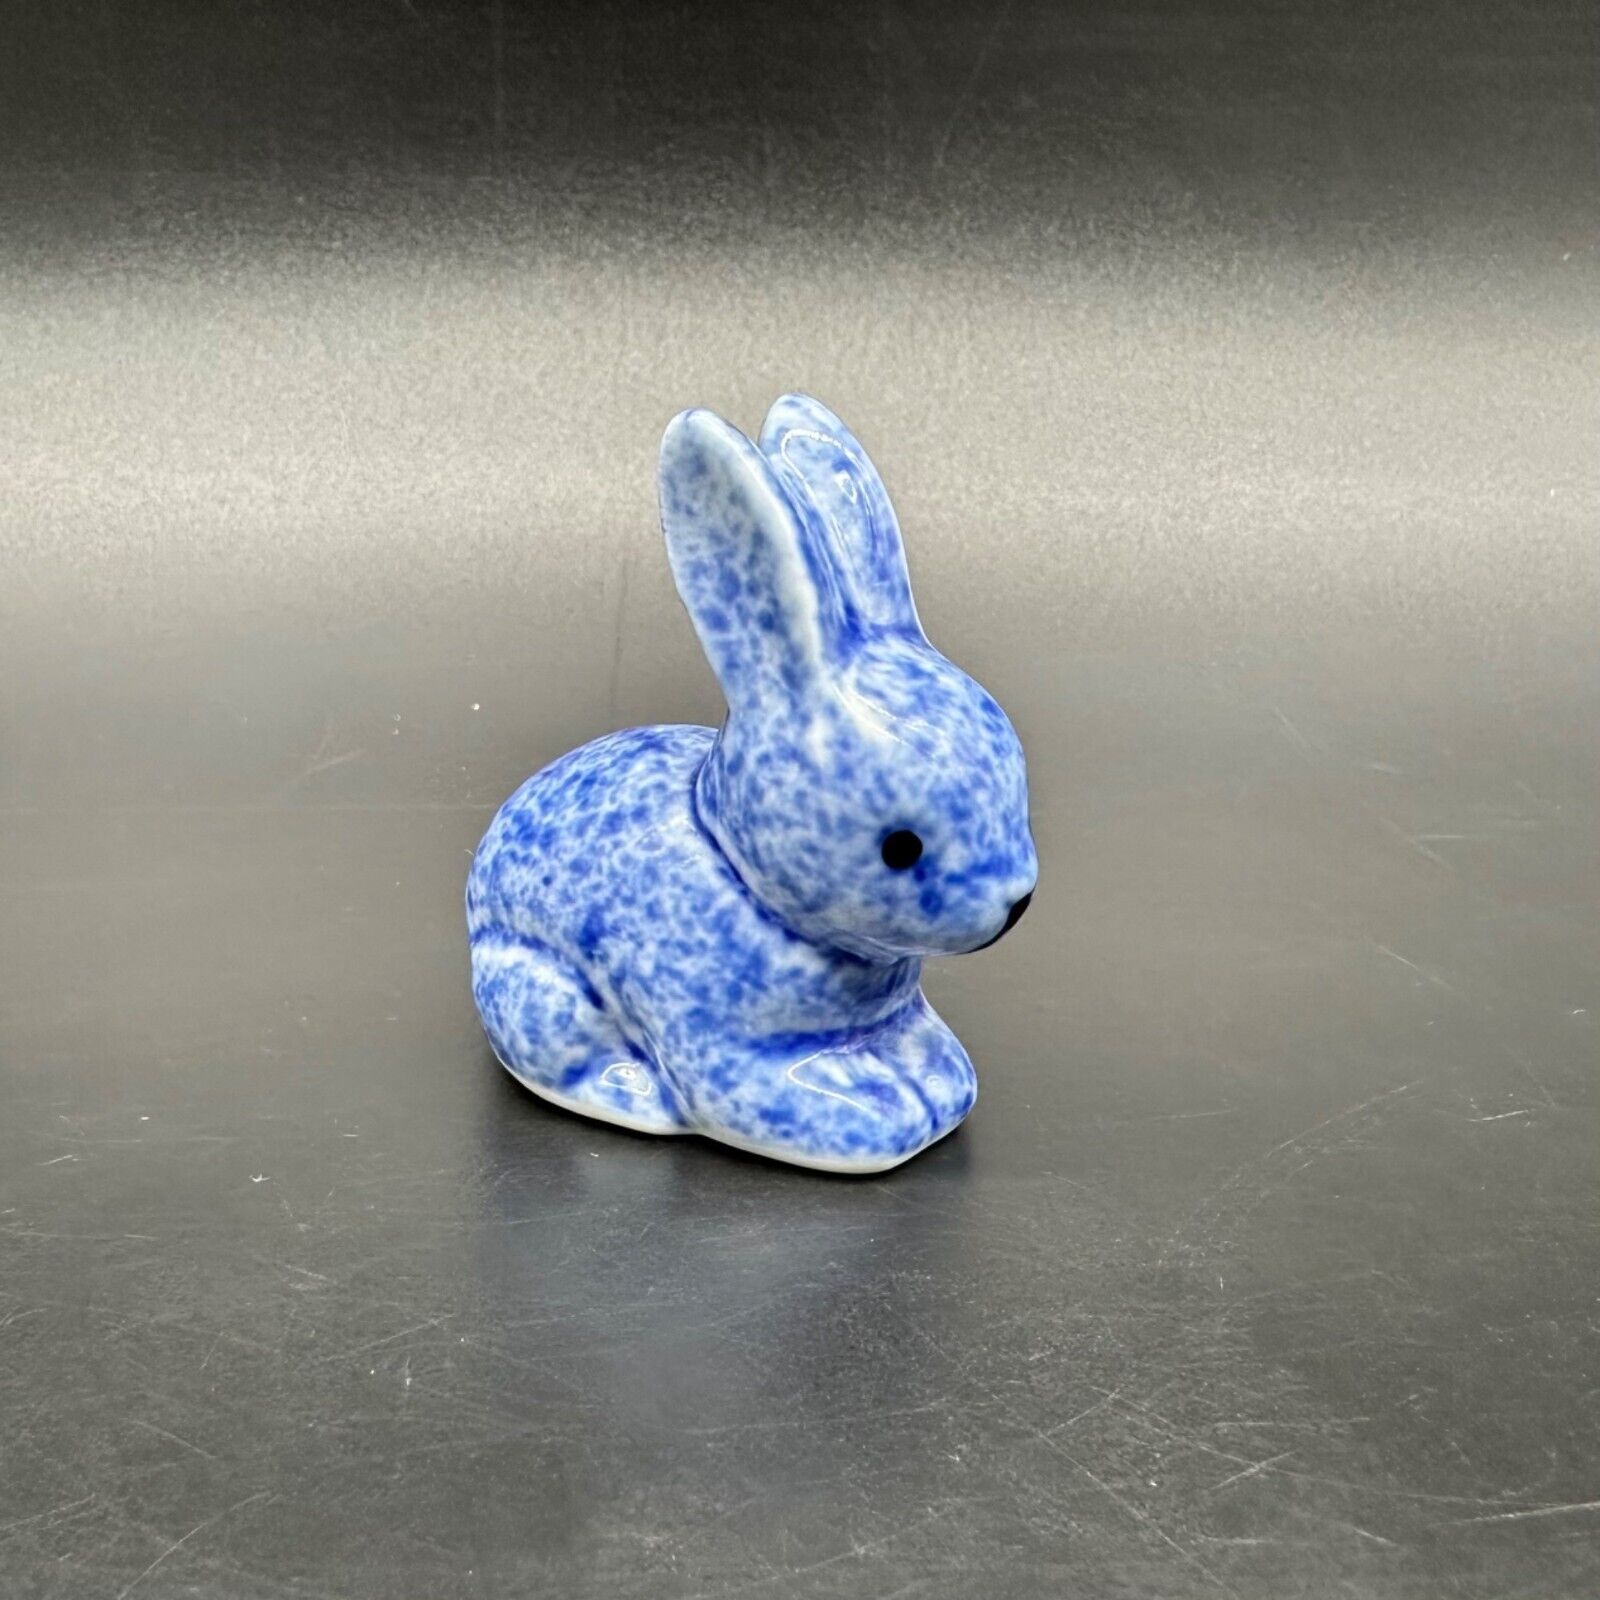 Vintage Blue Bunny Rabbit Figurine Enesco Miniature 1980s Ceramic Easter Decor